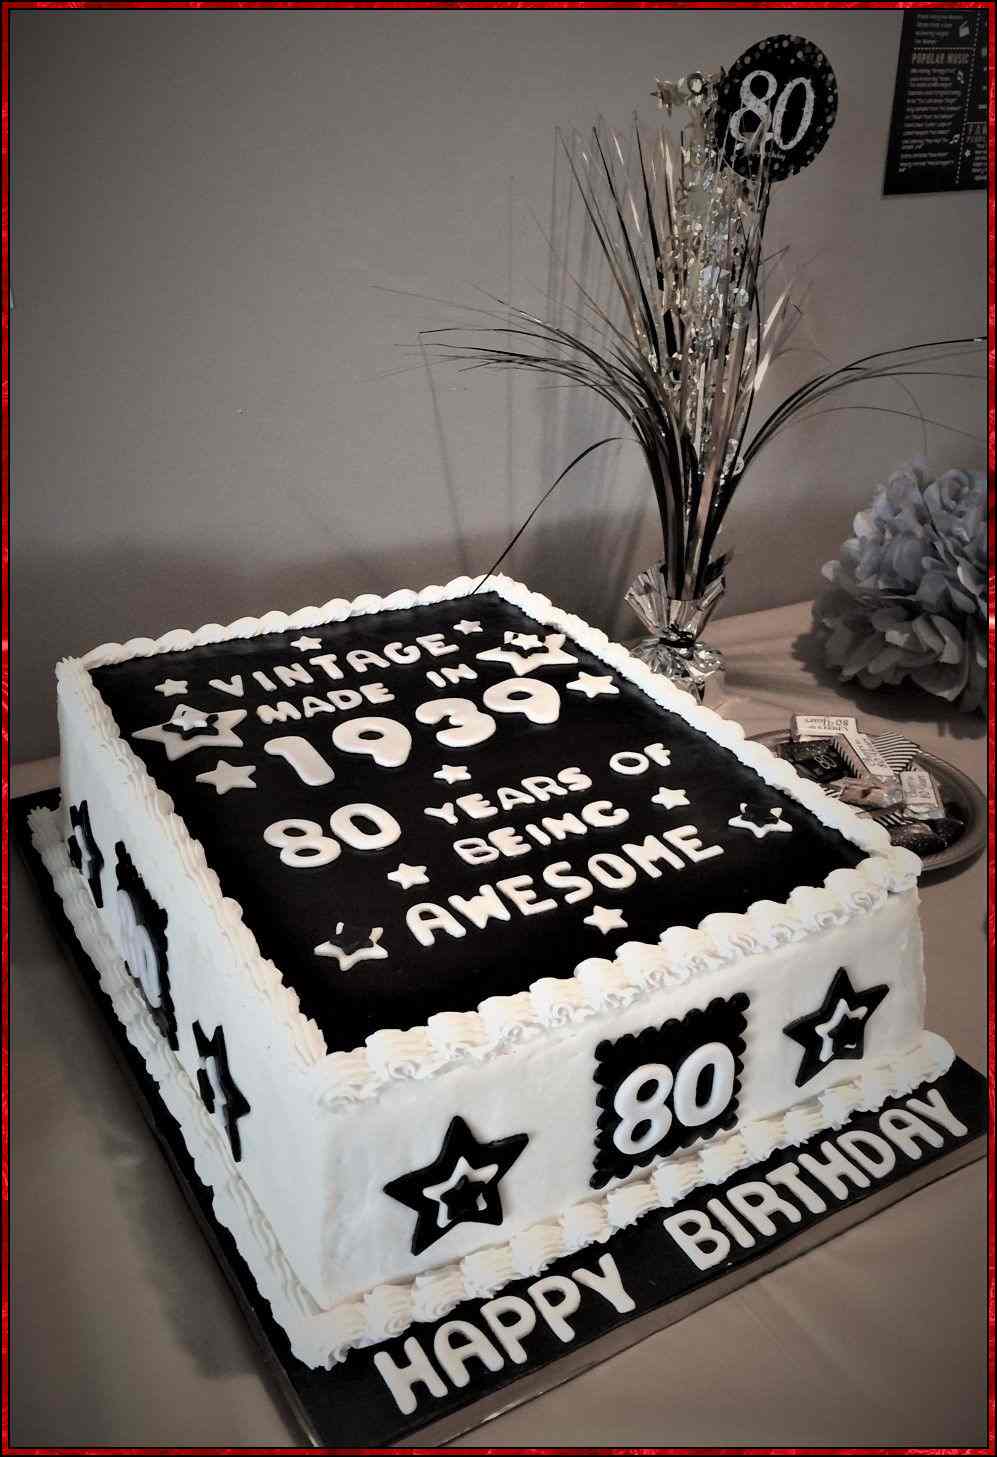 80th birthday cake images
